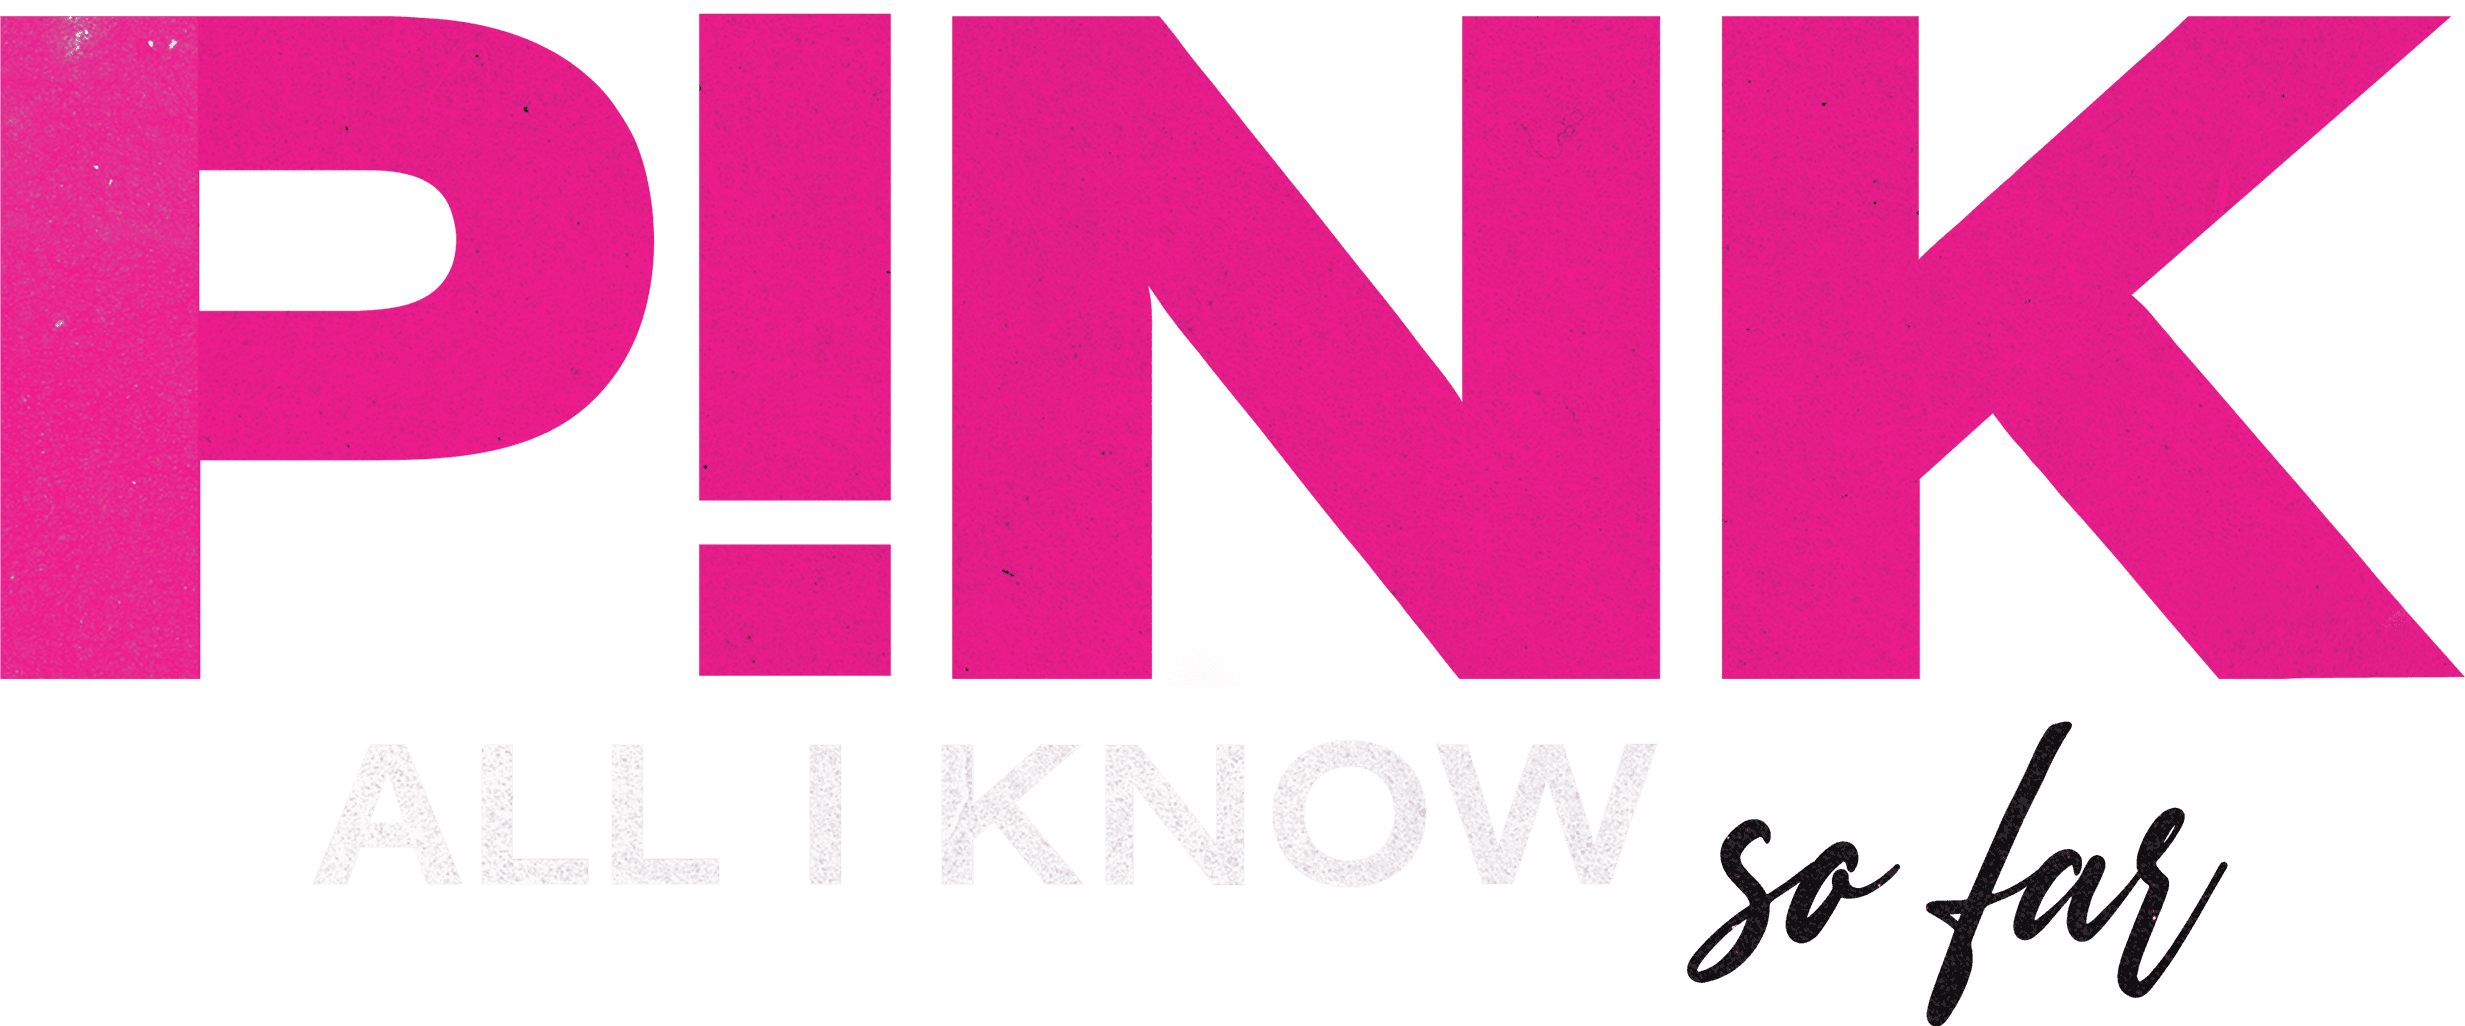 P!nk: All I Know So Far logo